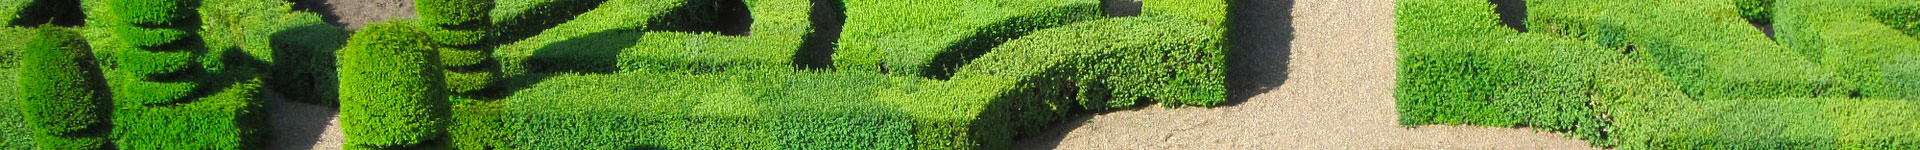 French garden hedge trimmed yew maze